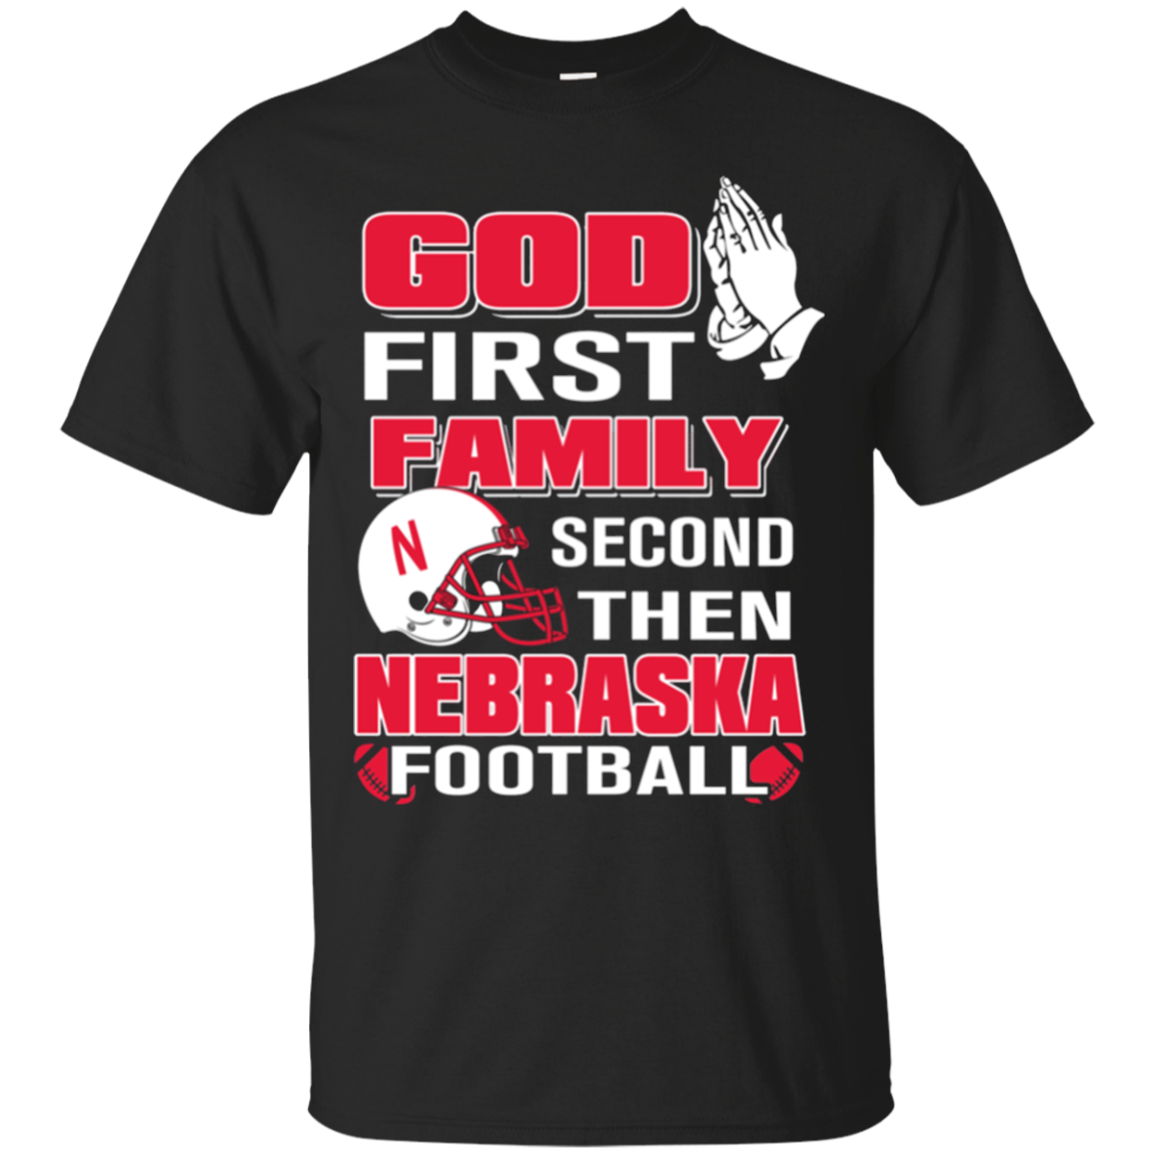 God First Family Second Then Nebraska Football T - Shirt For 